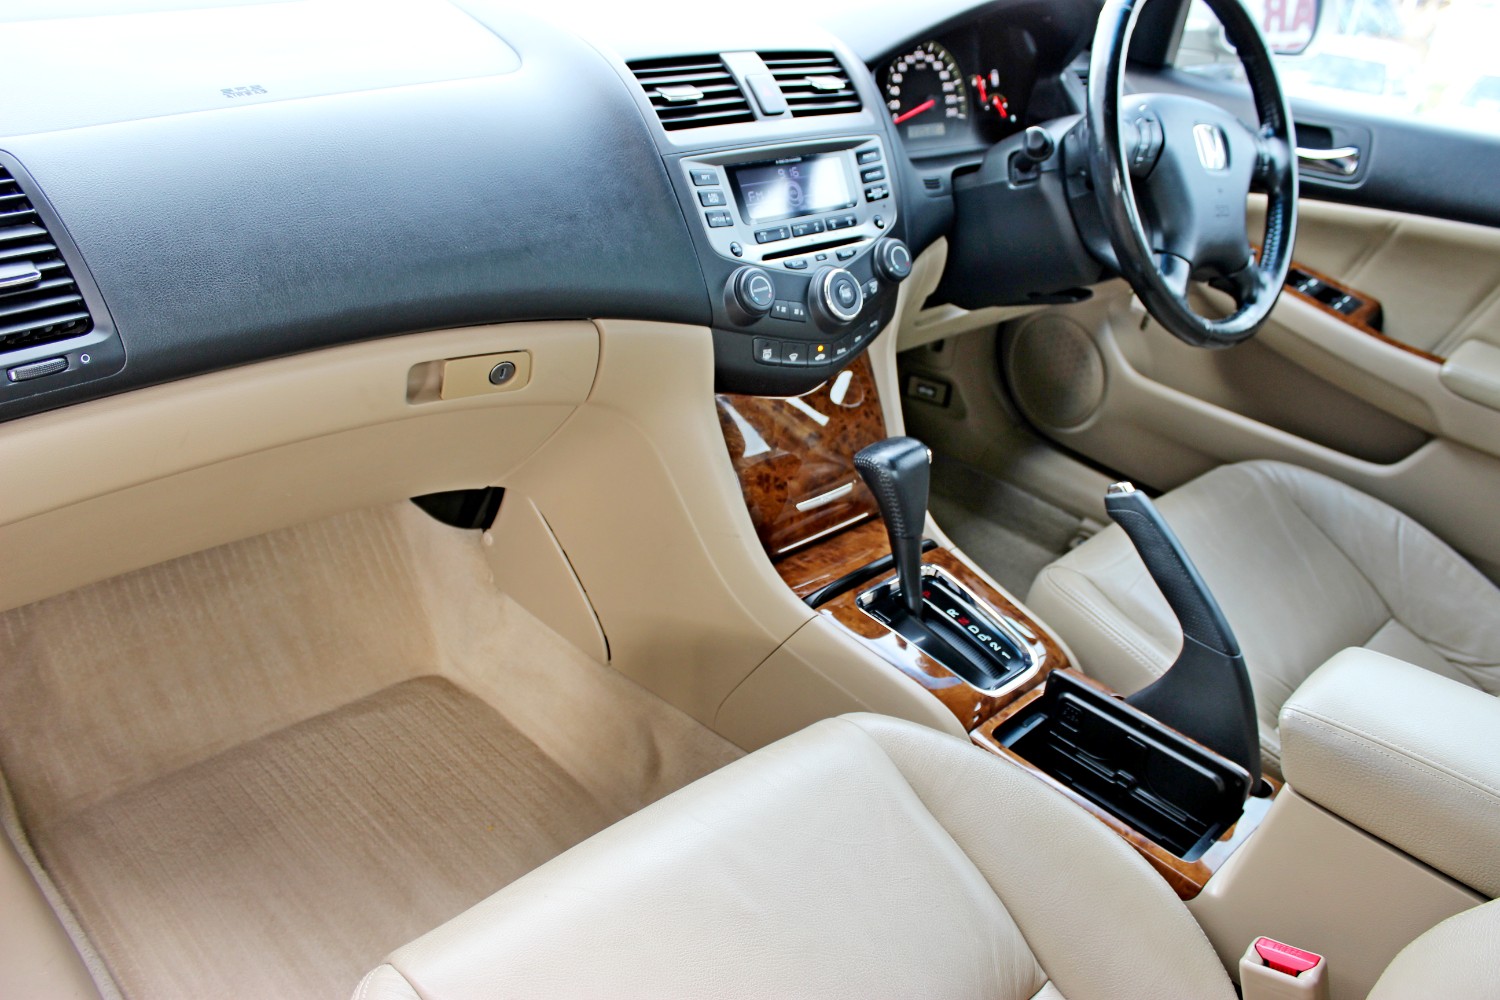 2005 Honda Accord 7th Gen V6 V6 - Luxury Sedan Image 10